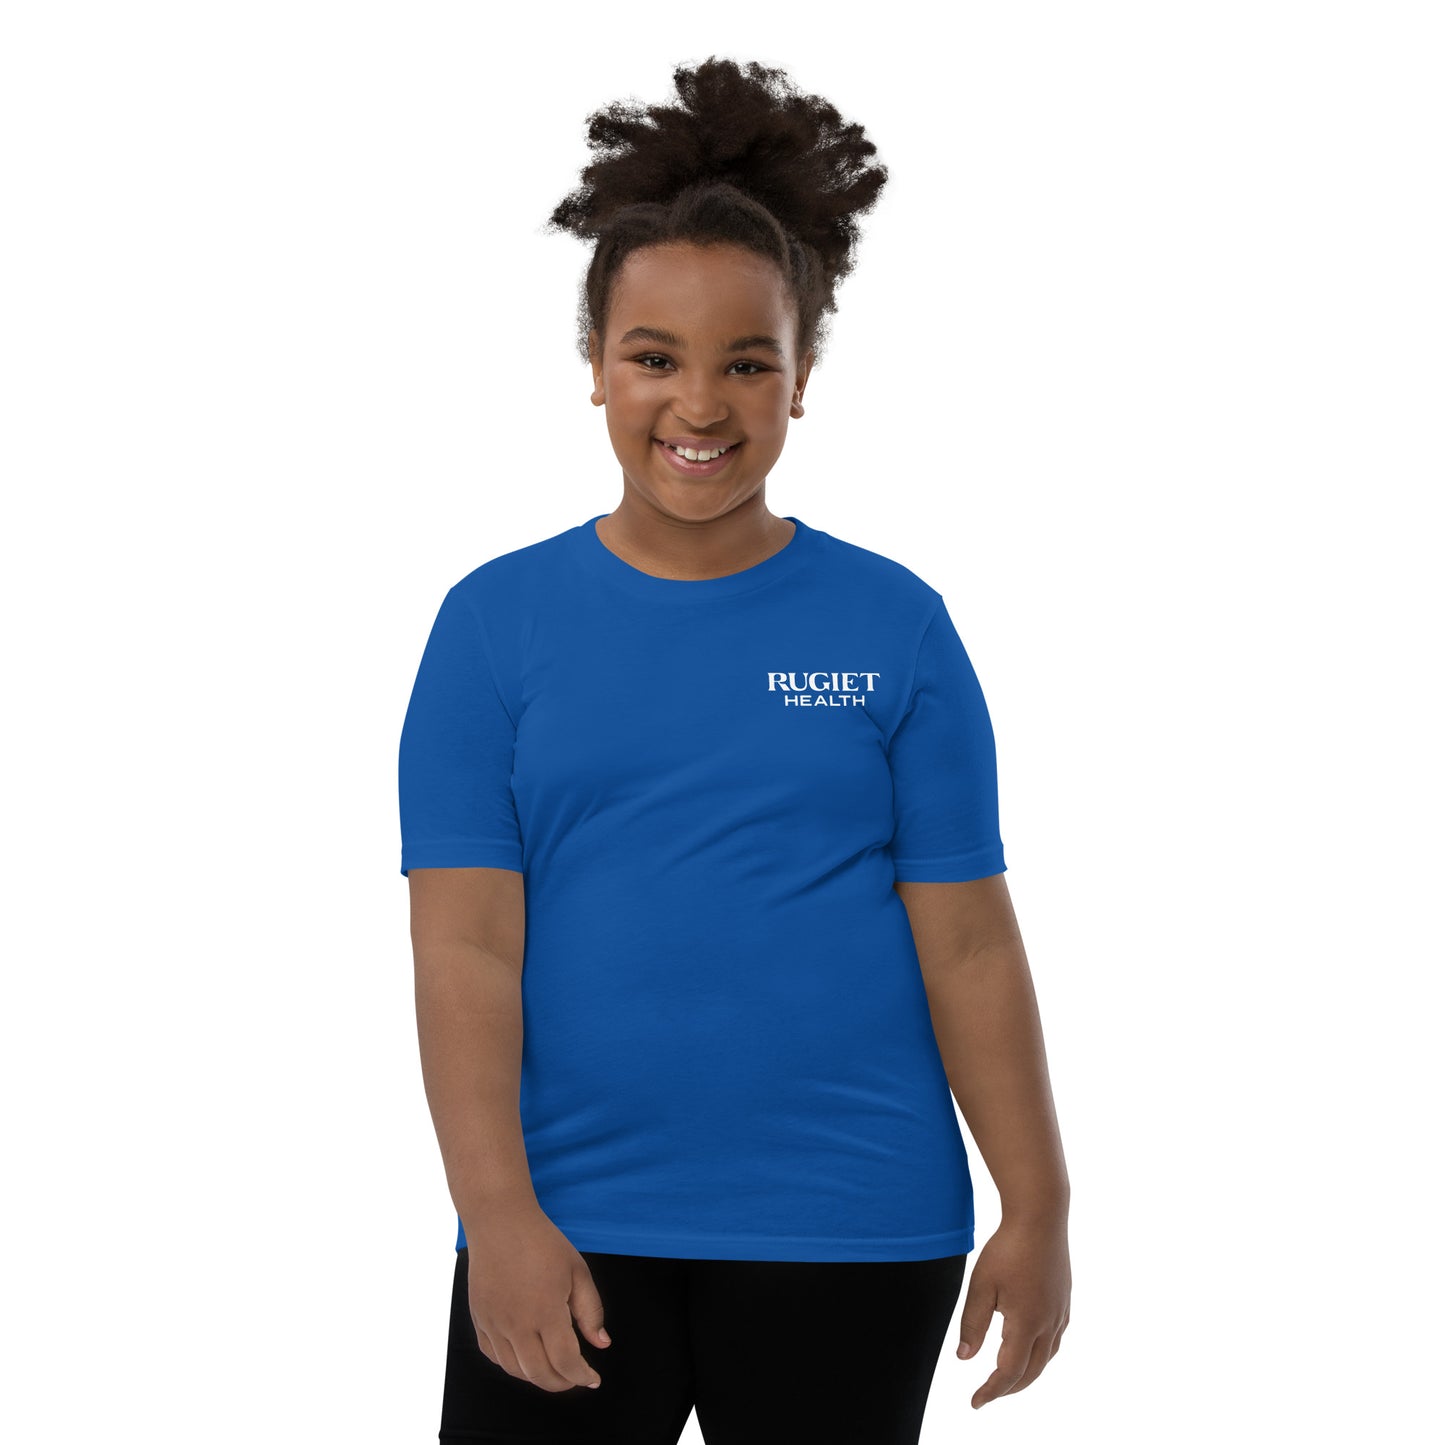 Youth Short Sleeve T-Shirt - Rugiet Health